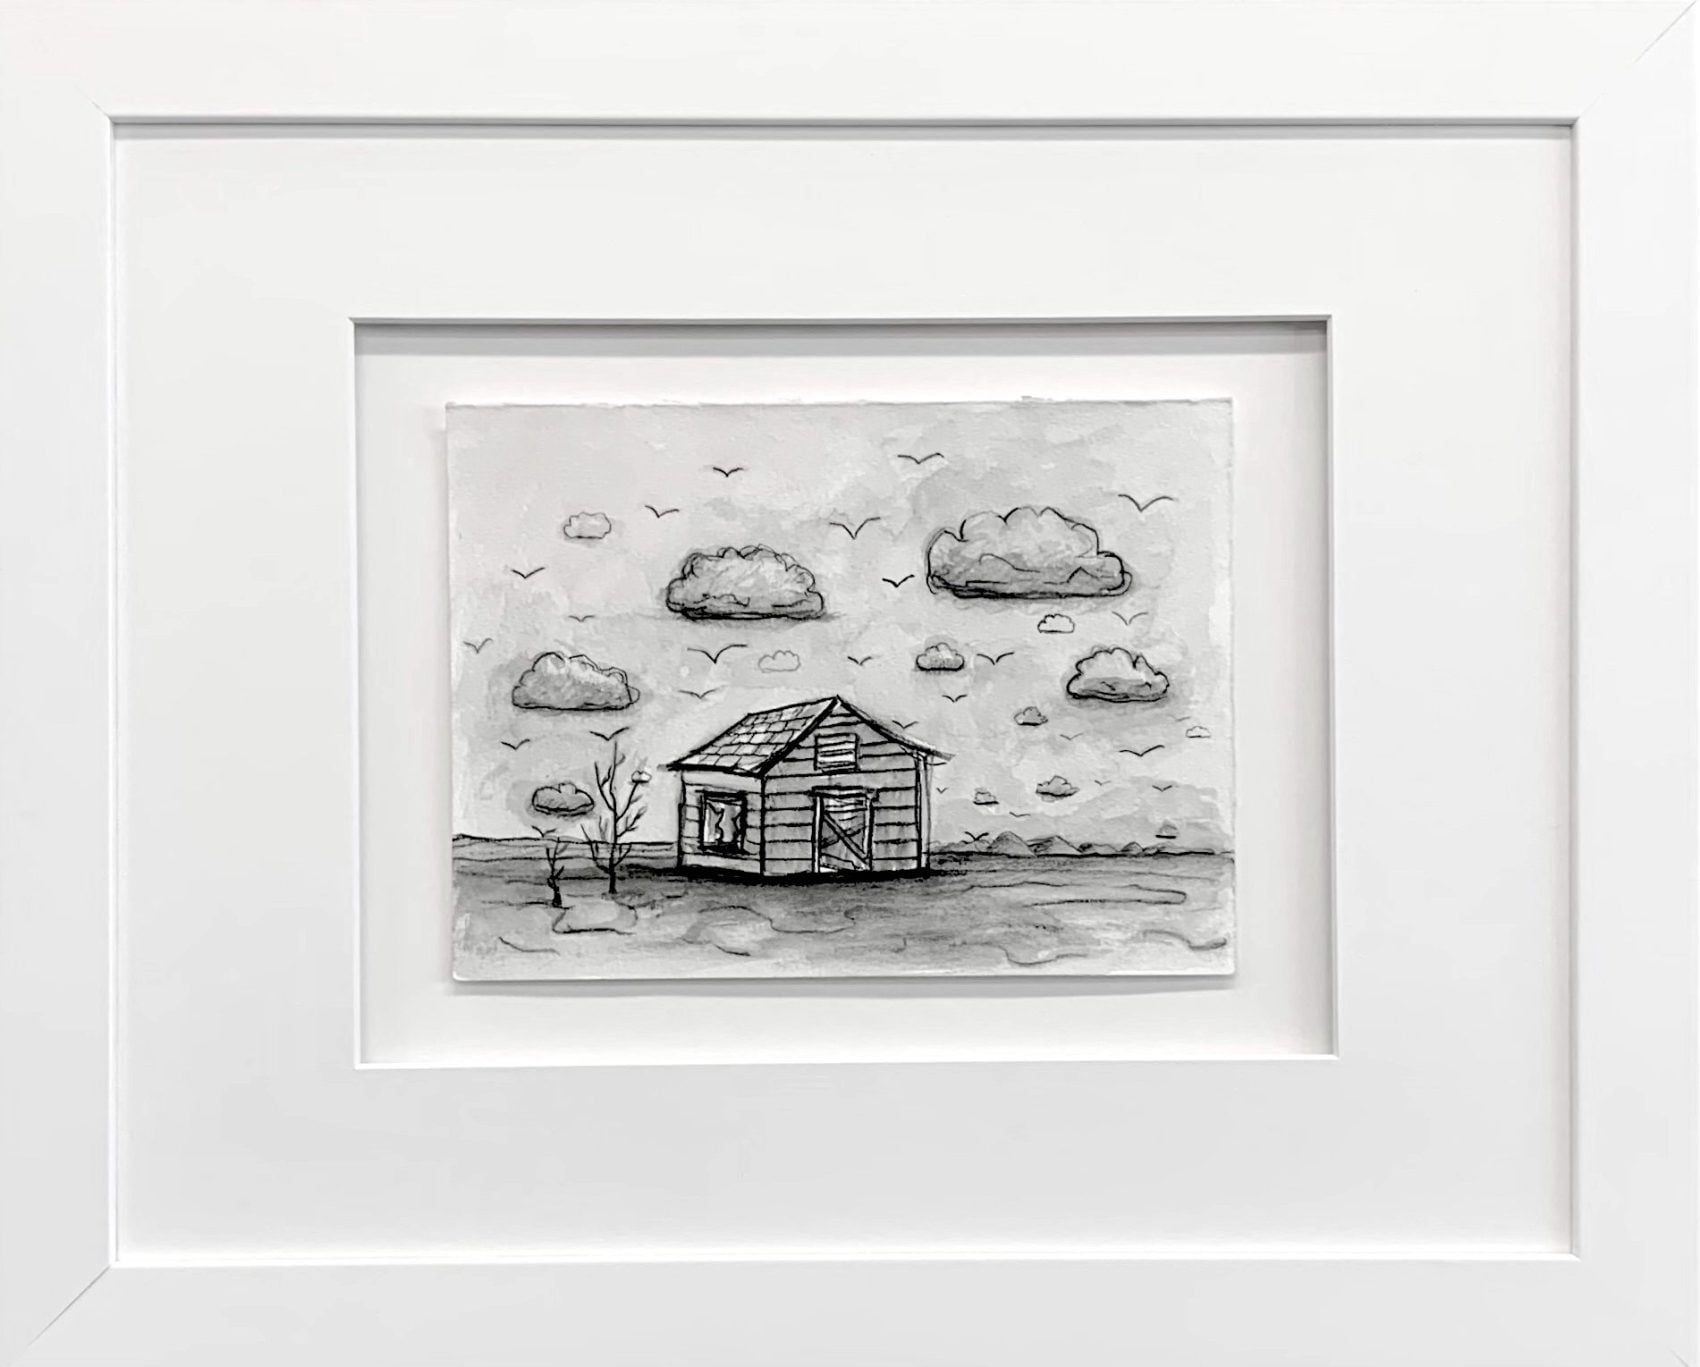 ernie-klinger-flight-black-and-white-abstract-landscape-online-gallery